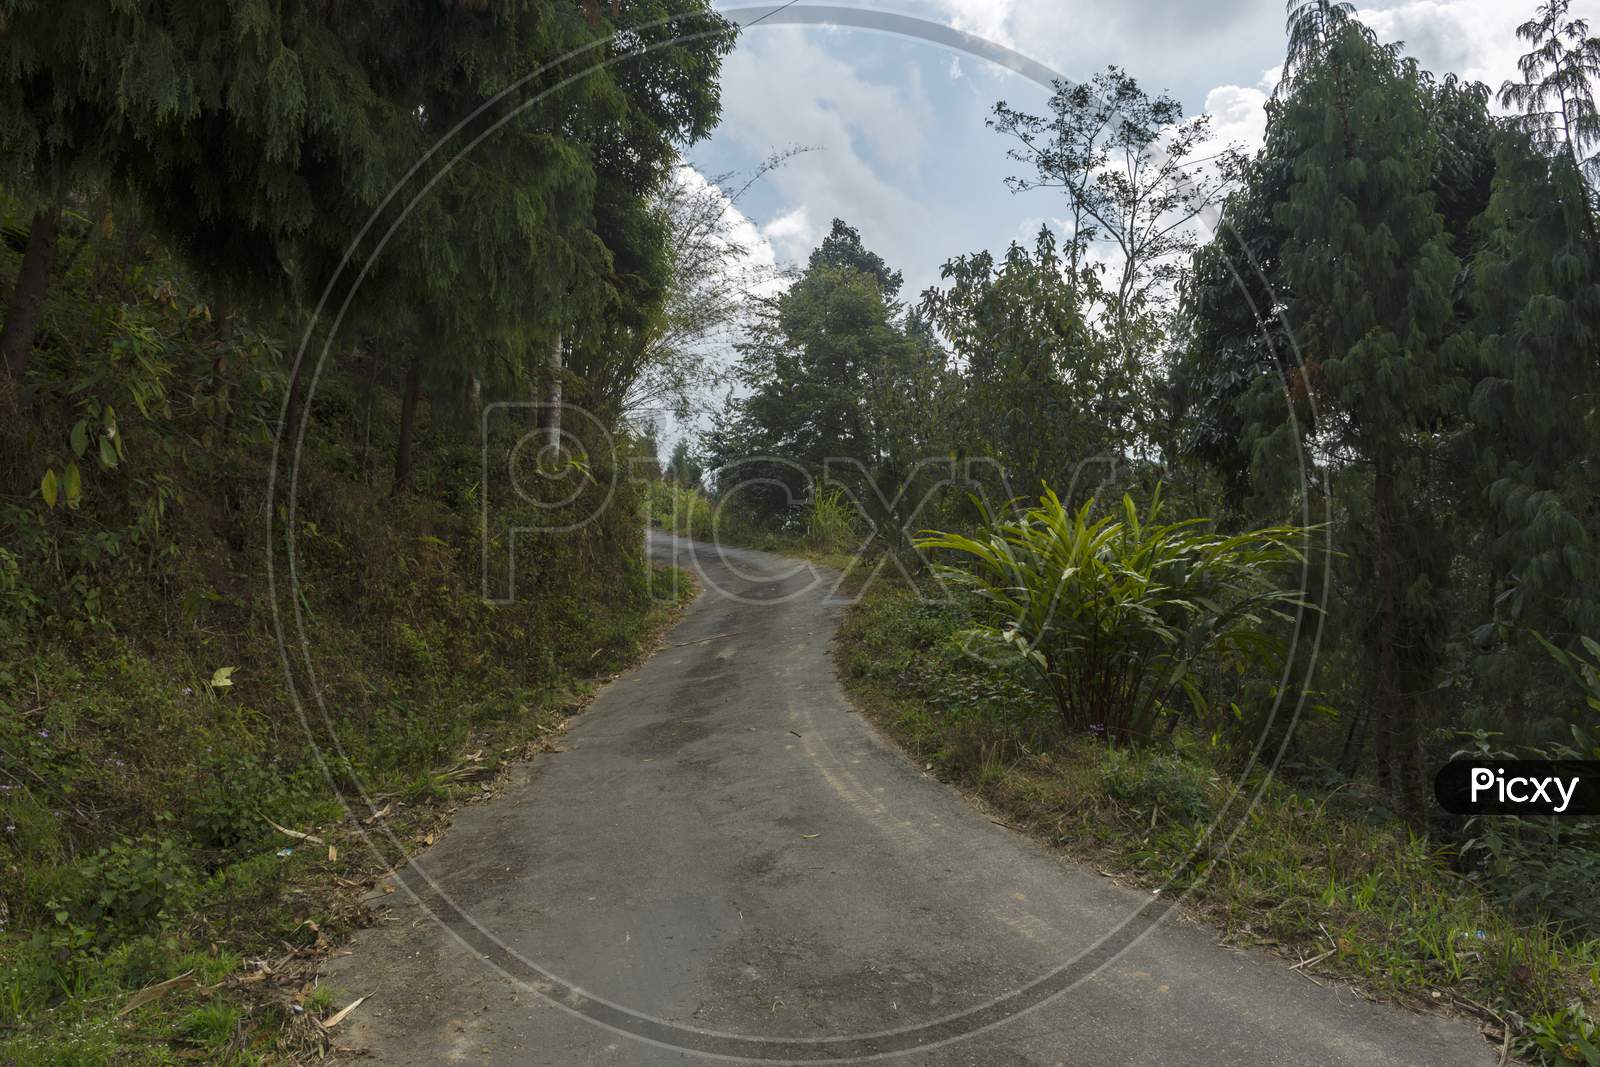 A Village Path Or Road Going Towards Mim Tea Factory, Darjeeling, West Bengal, India